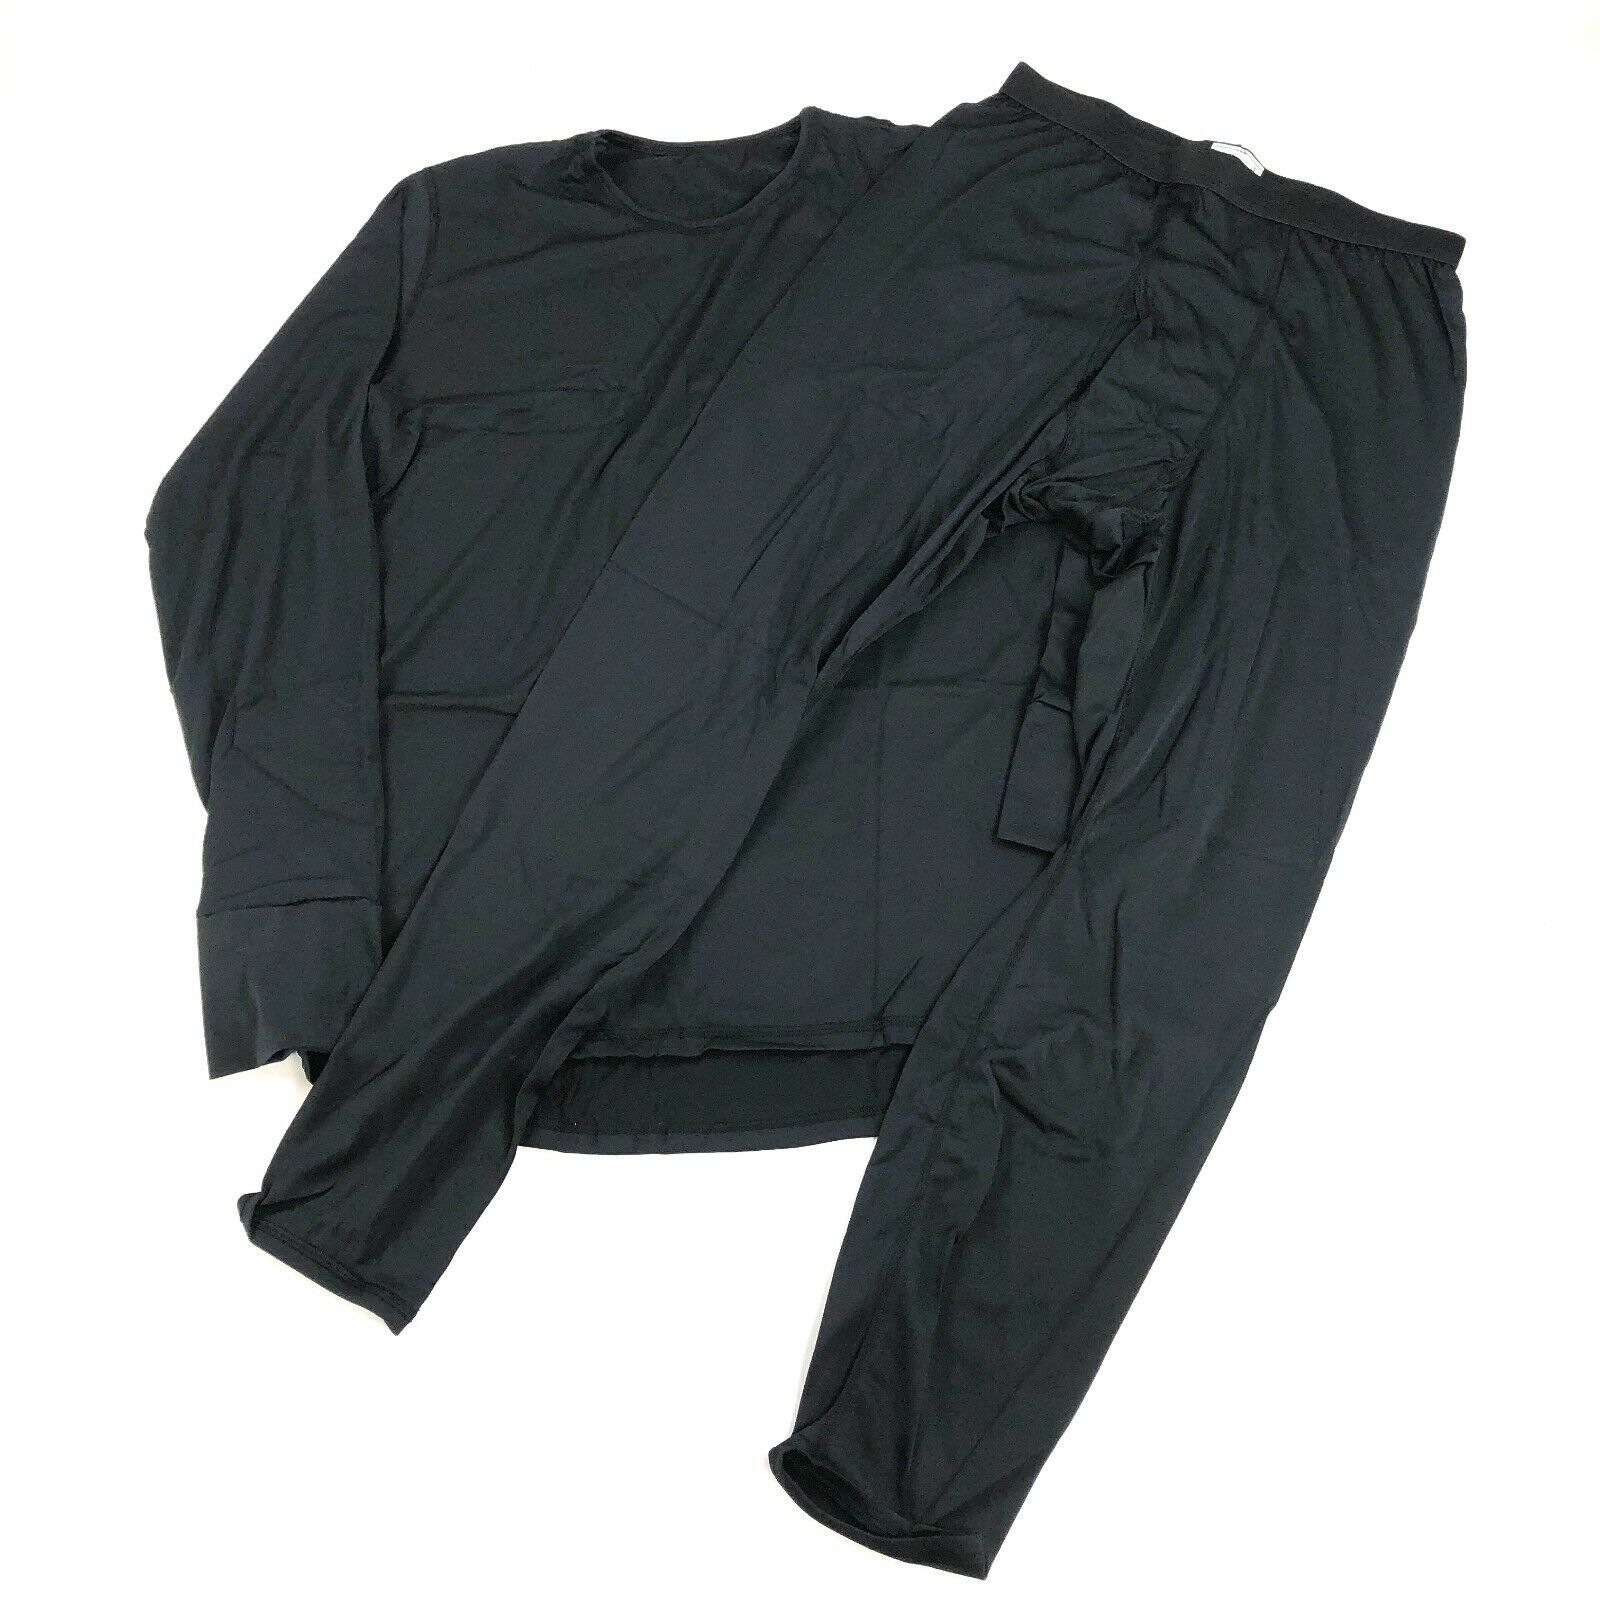 Polartec Level 1 Shirt & Pants Set Black ECWCS Ninja Suit Power Dry LARGE